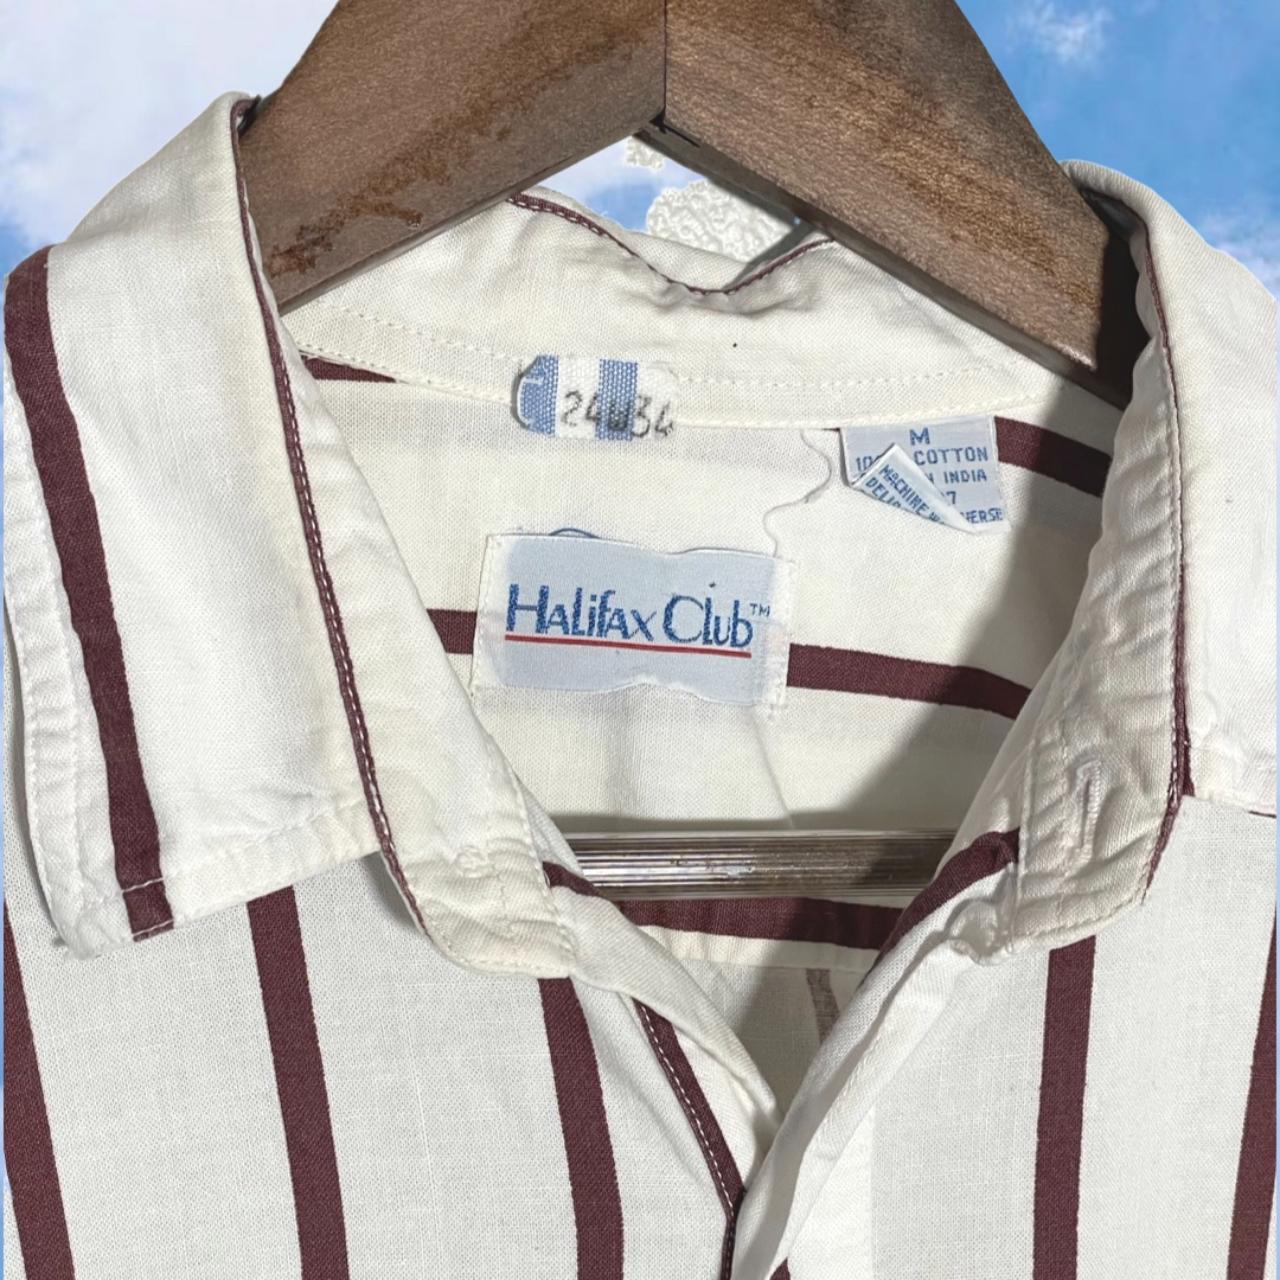 Product Image 2 - Halifax Men's Button Down Shirt

Size